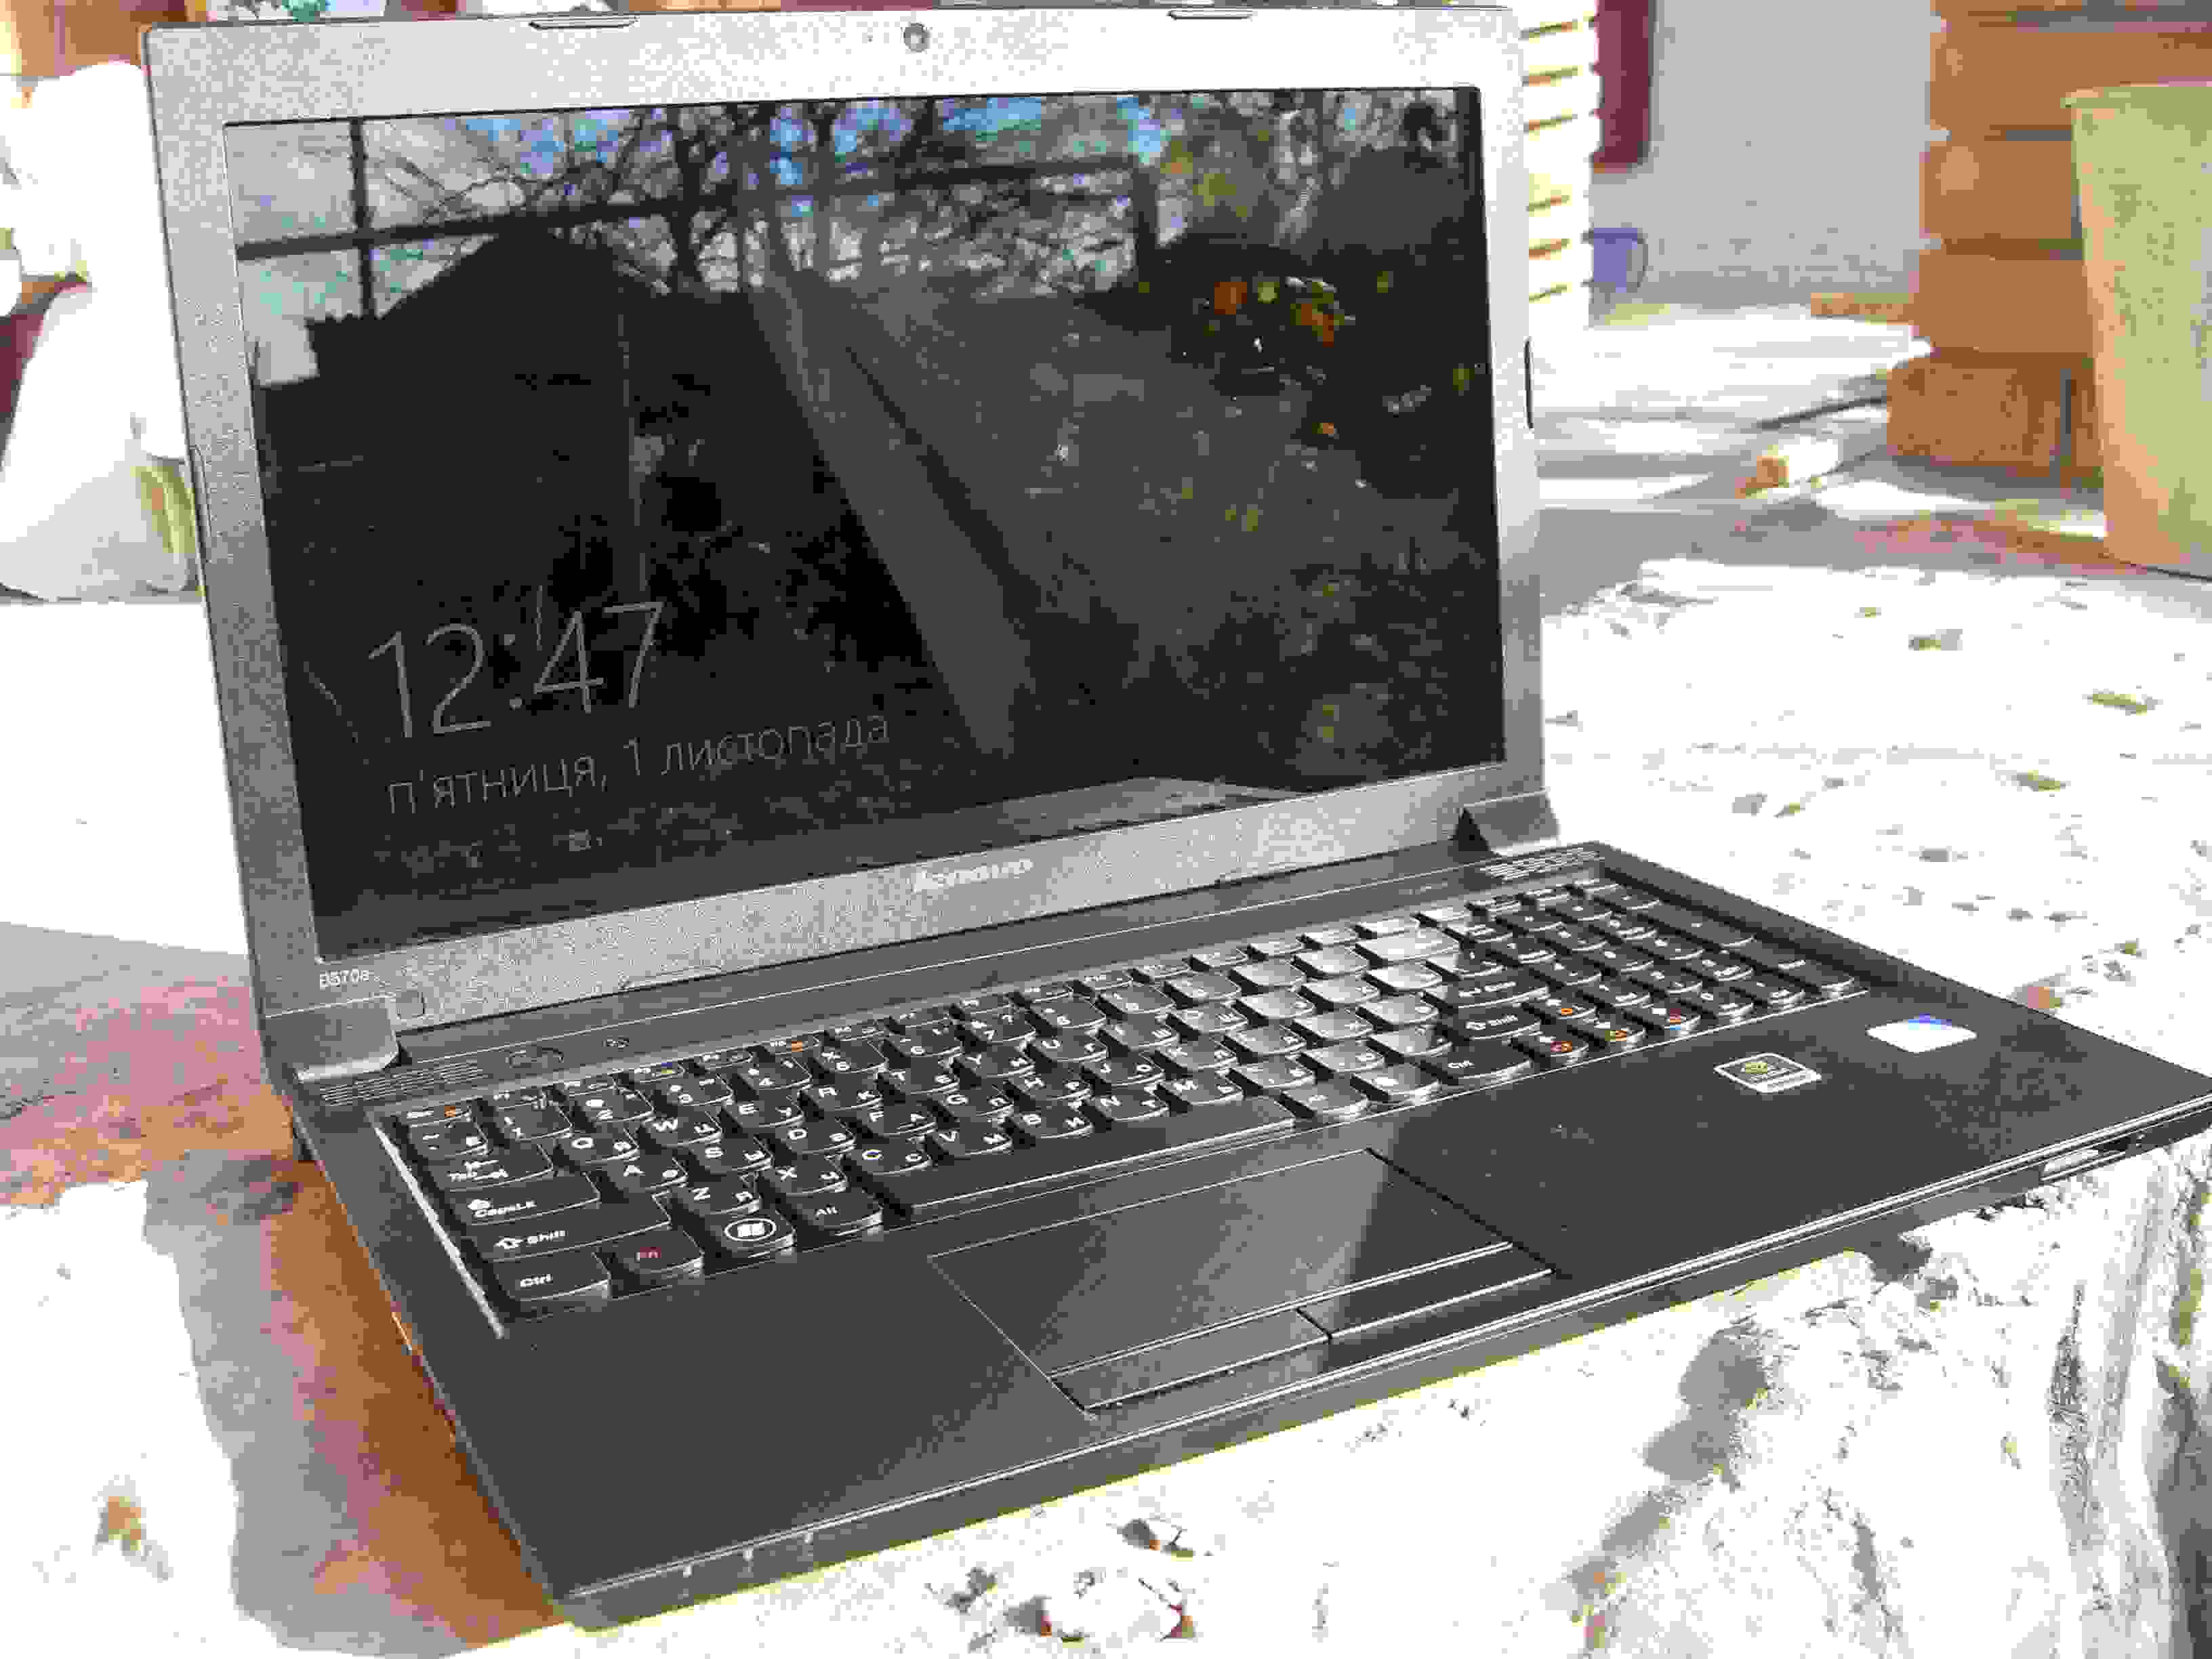 Обзор ноутбука Lenovo IdeaPad B570e